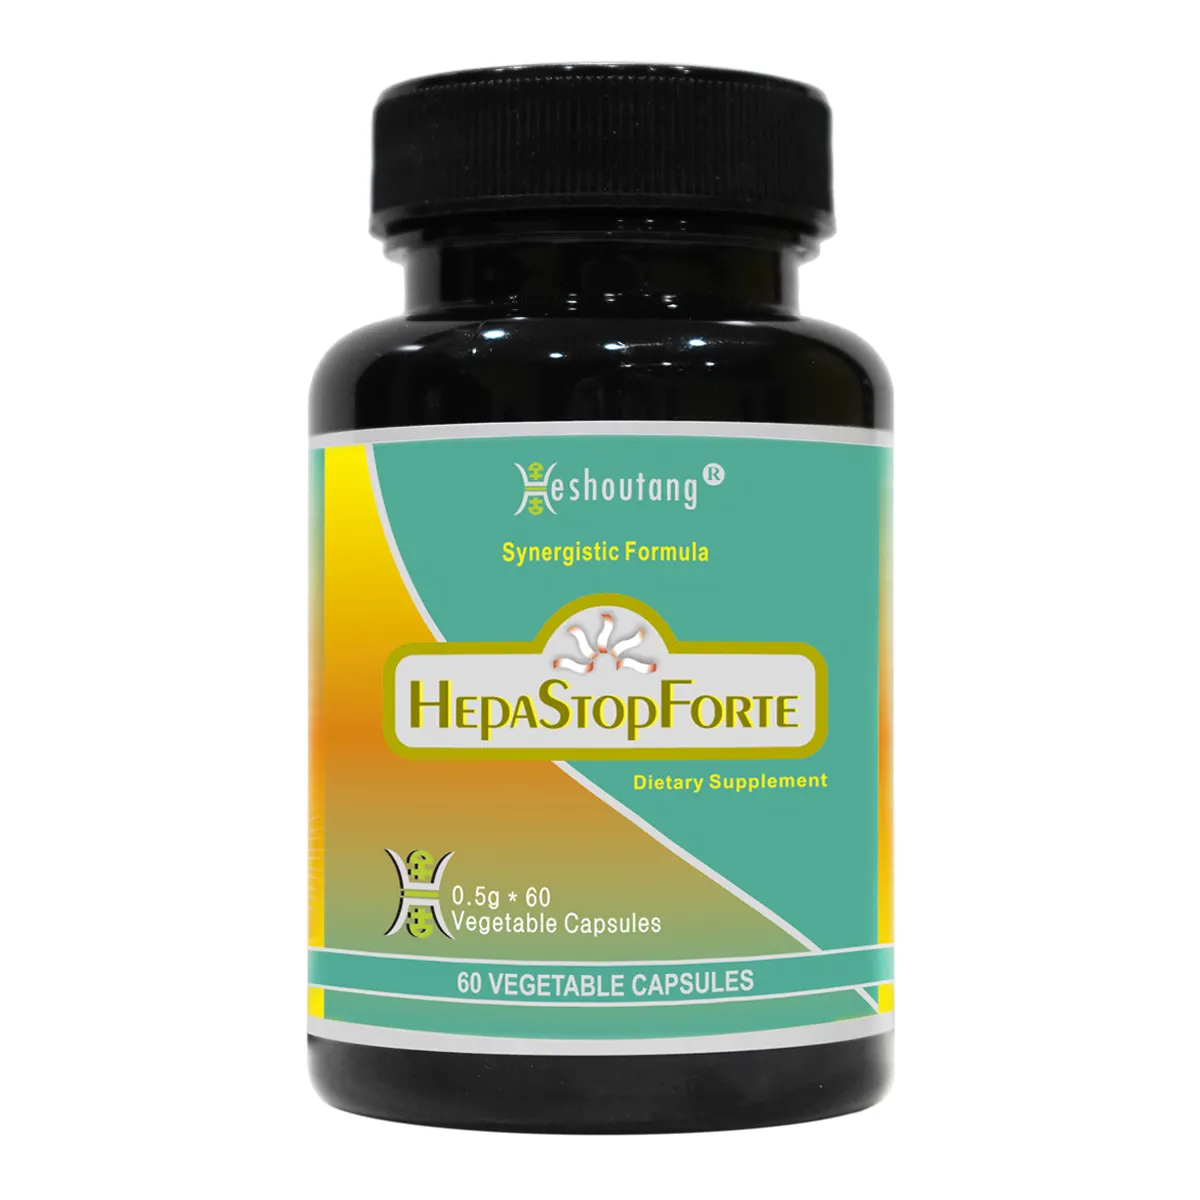 HepaStopForte|Market Proven Herbal Liver System Cleanser|12 Years on Market